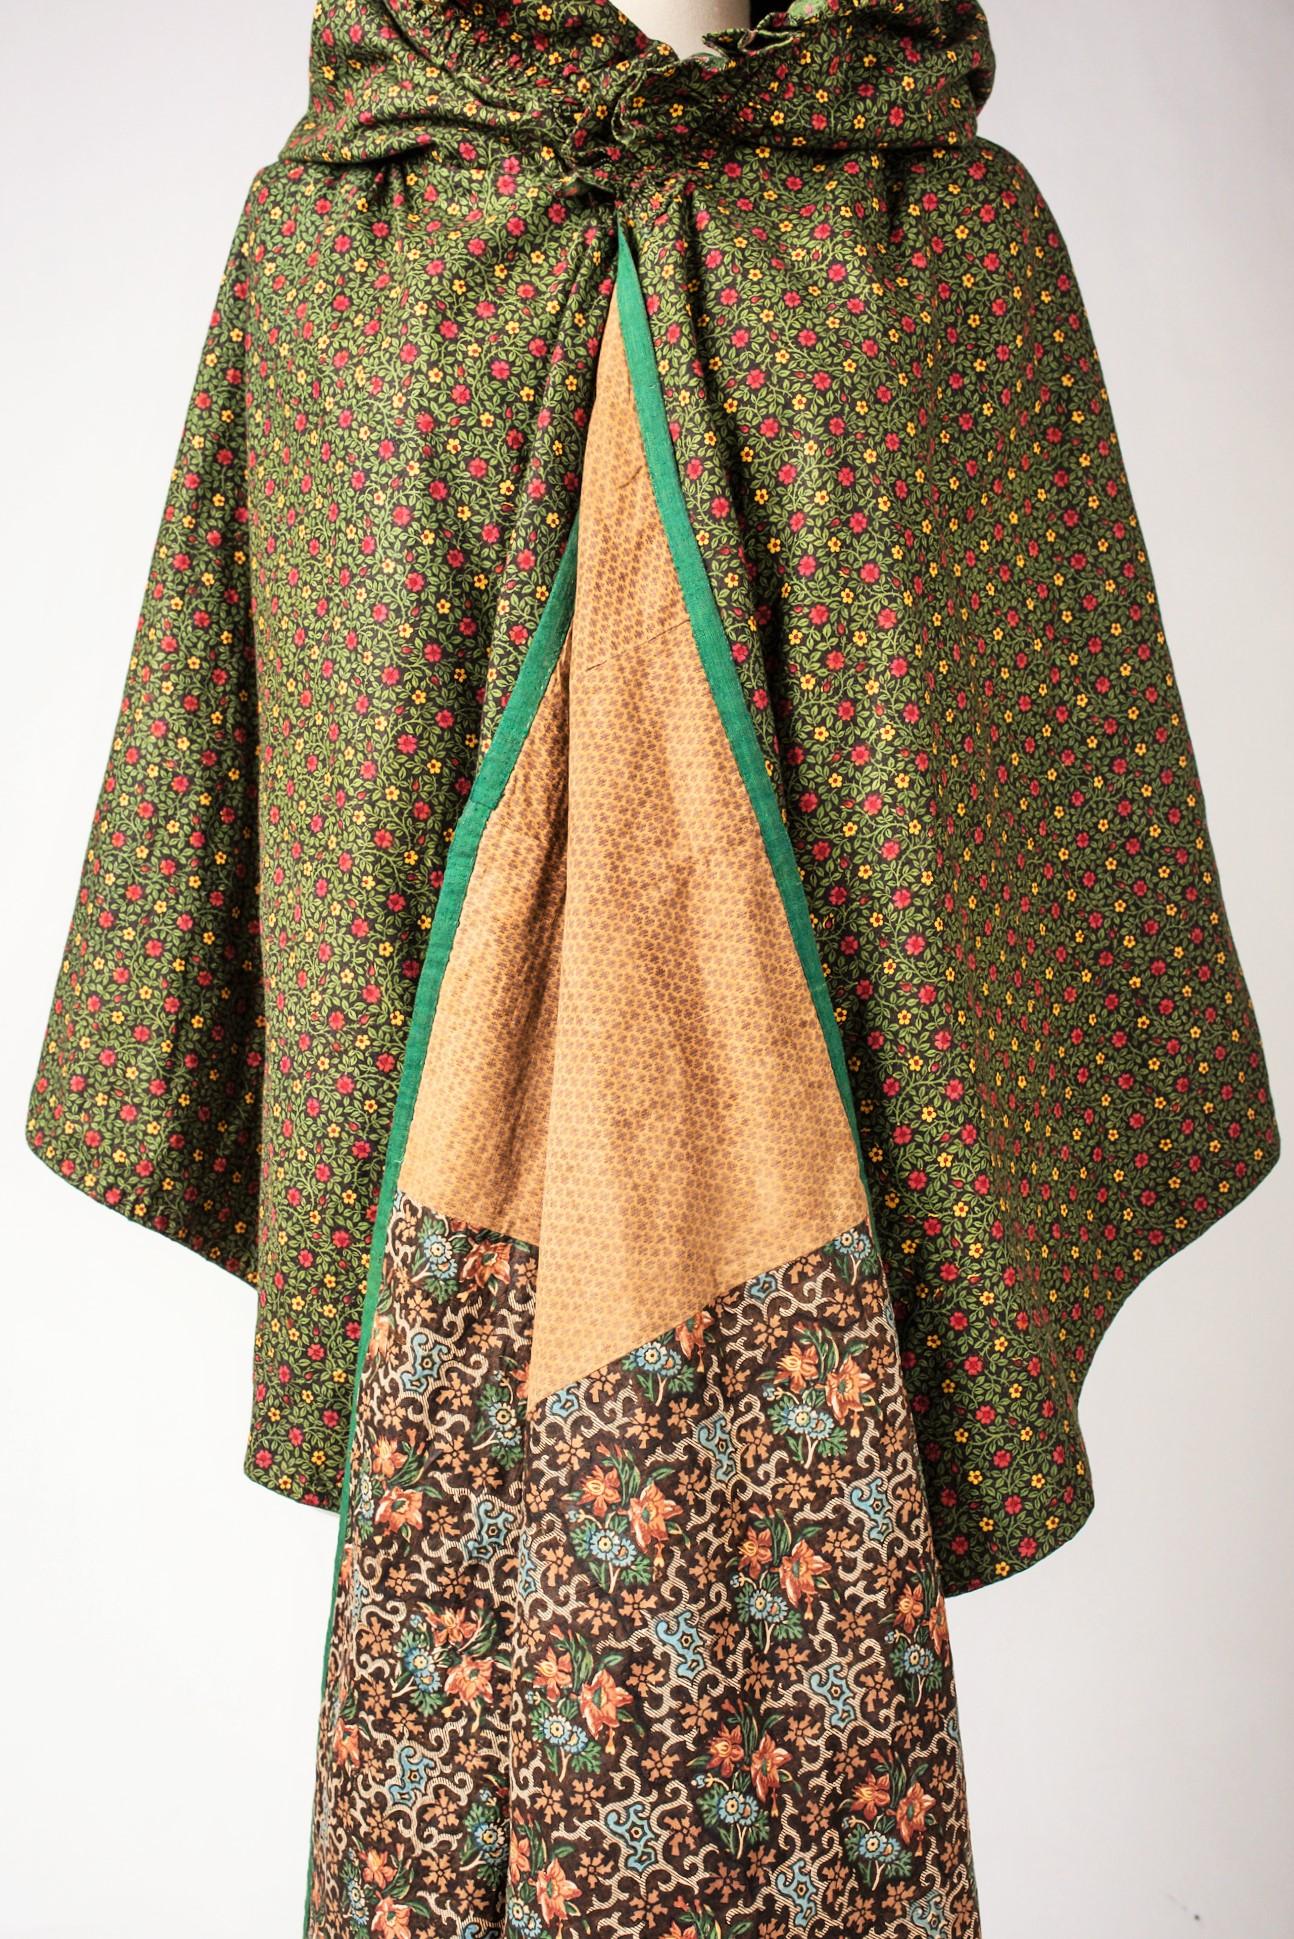 A Printed cotton Cloak- Provence Circa 1800 3